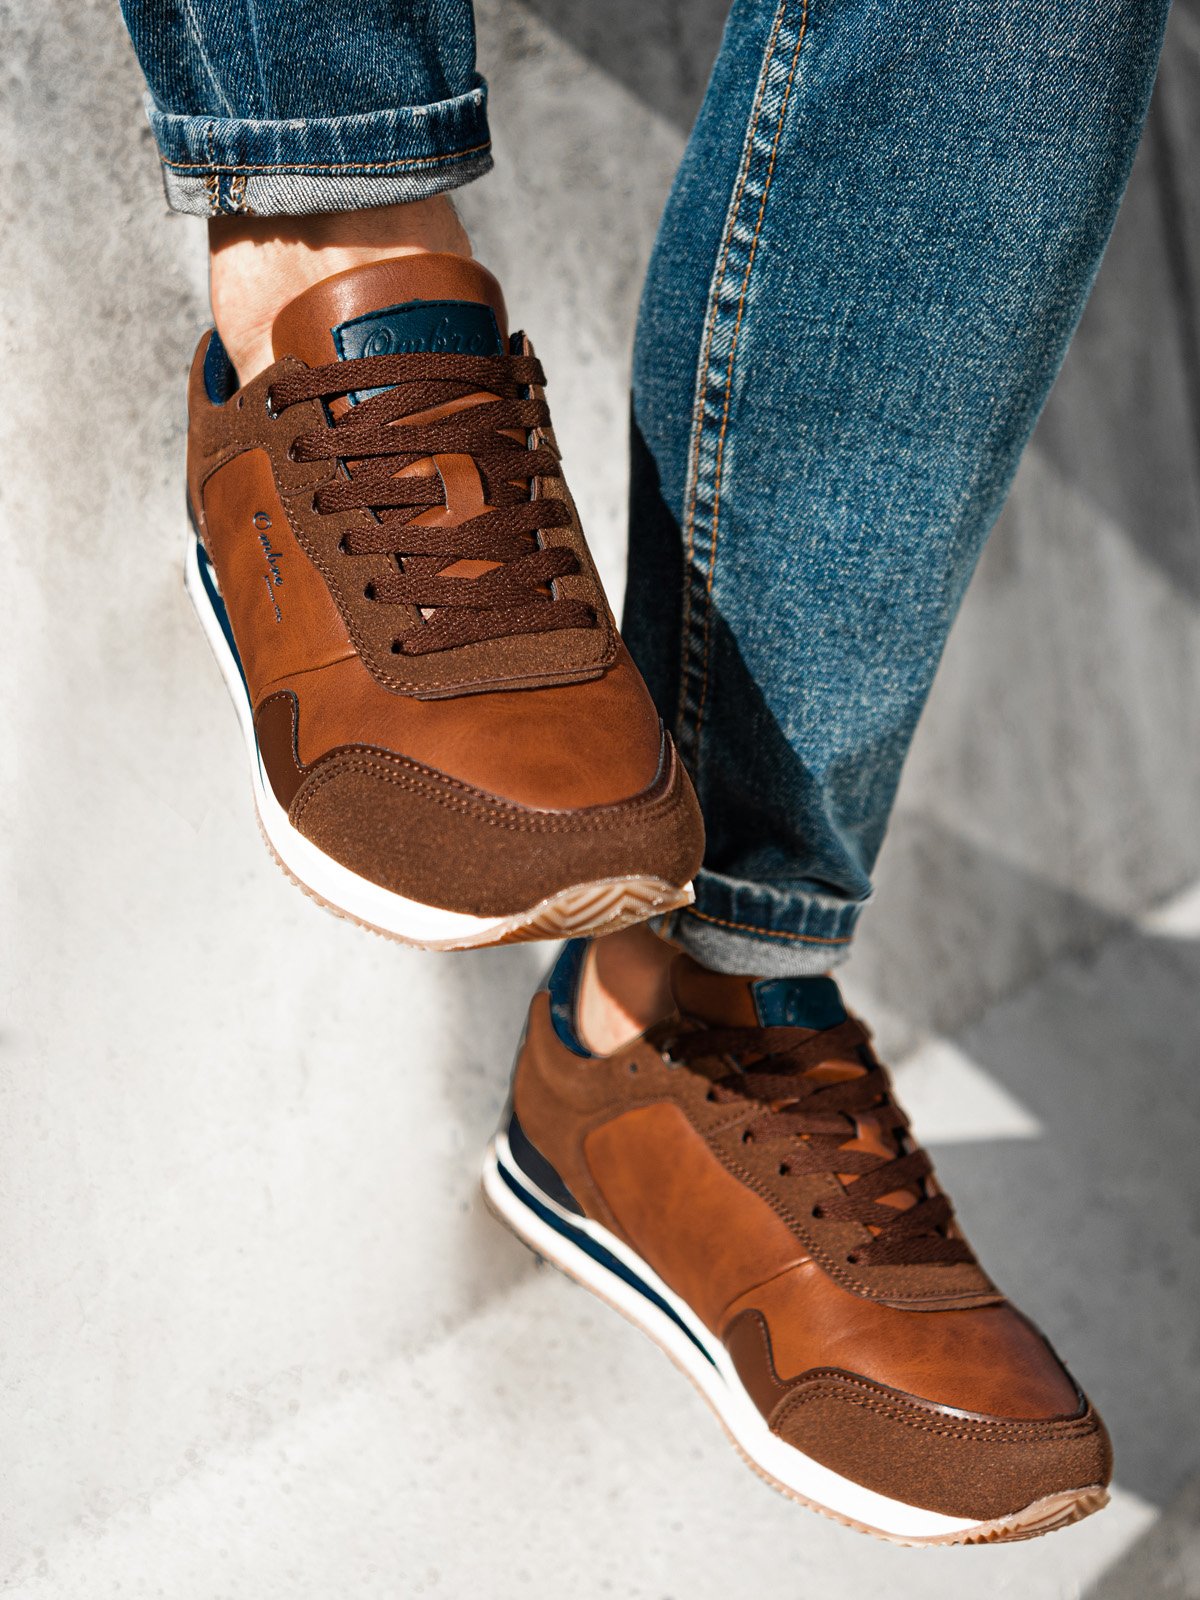 brown casual sneakers